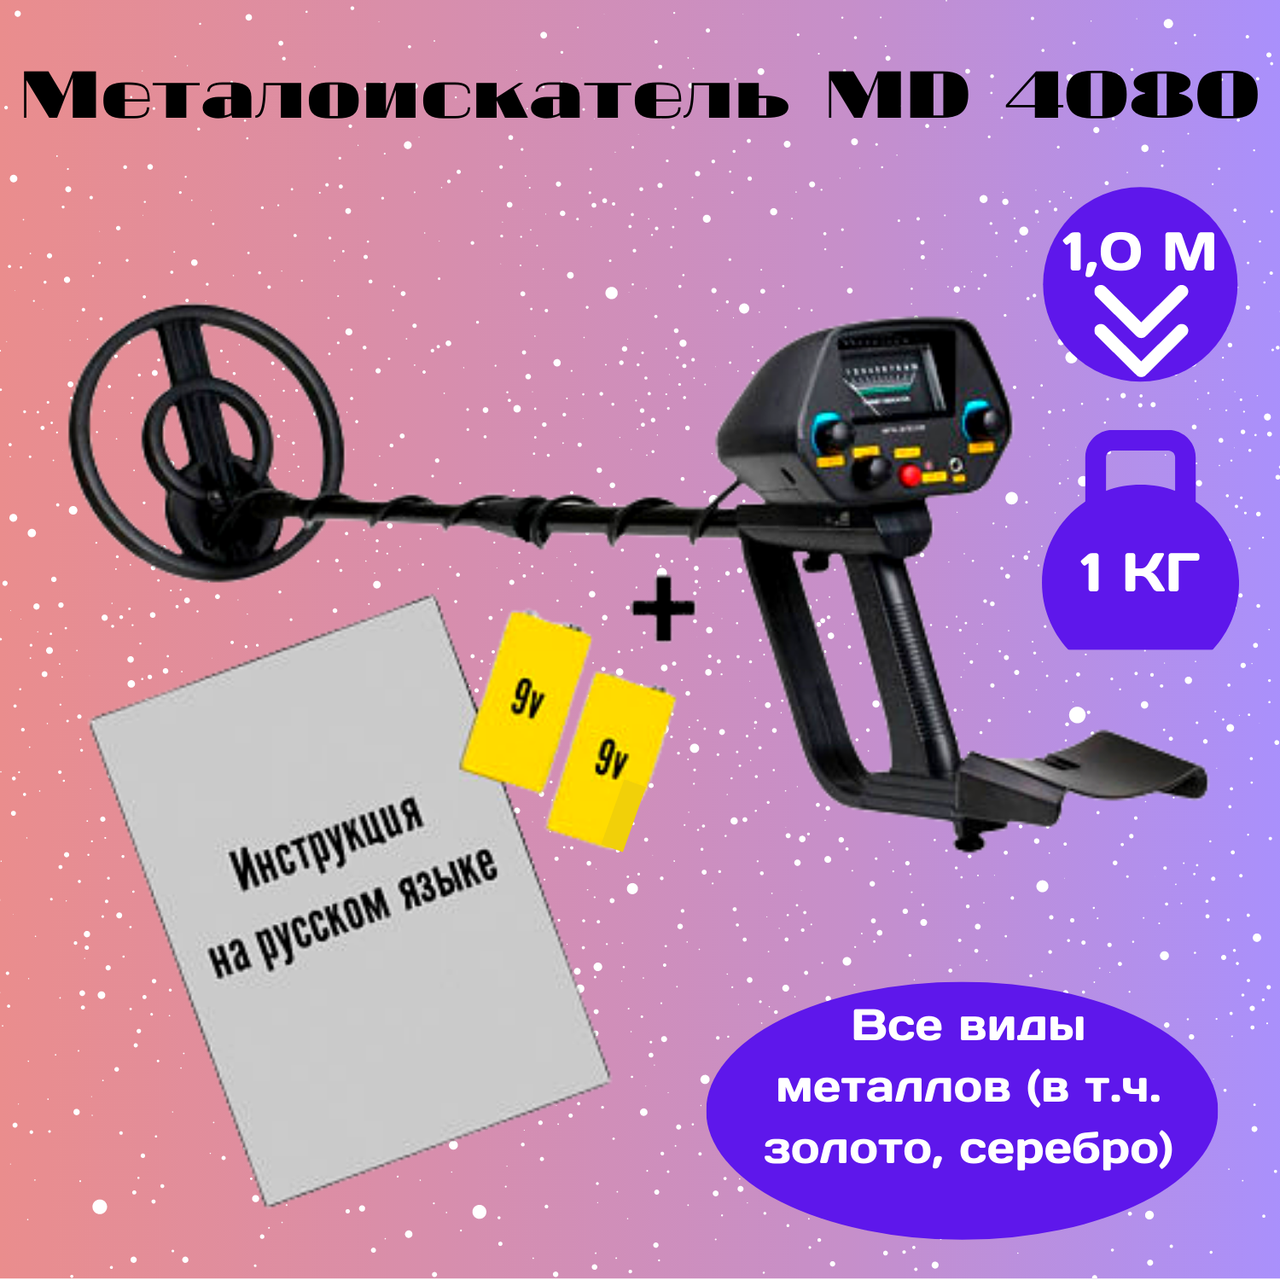 Металлоискатель NEXMOR MD 4080